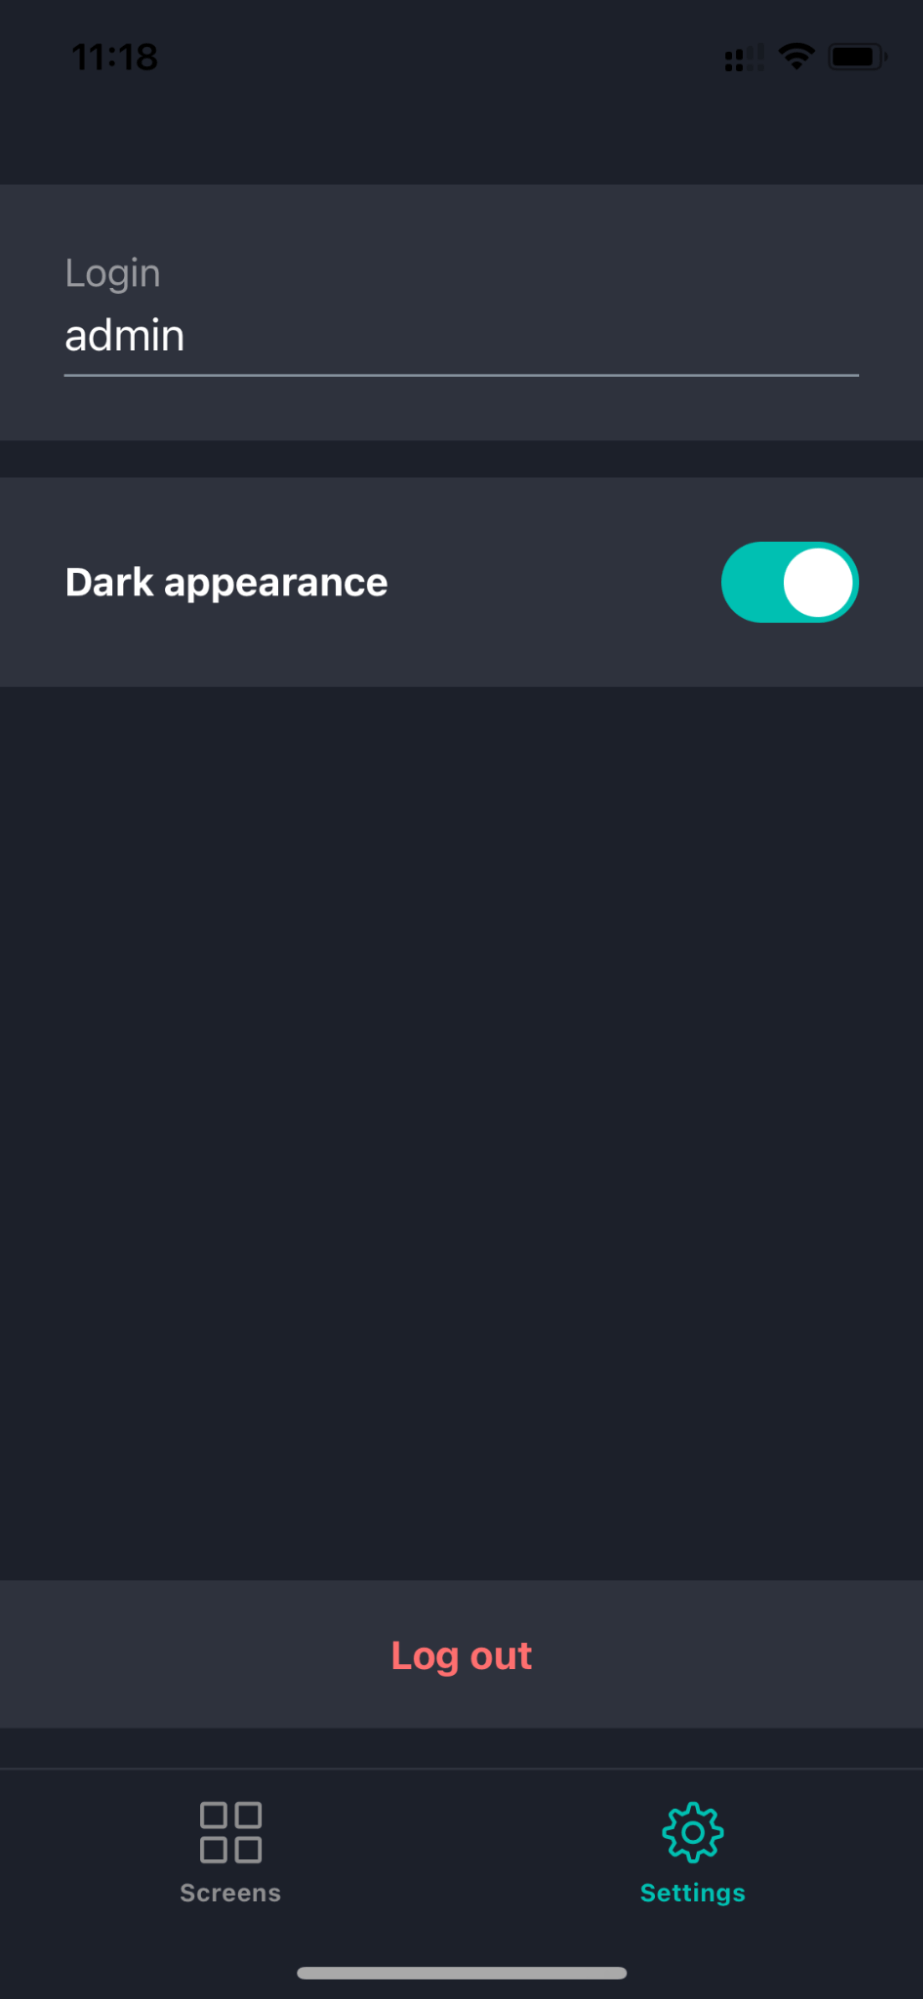 Dark appearance on